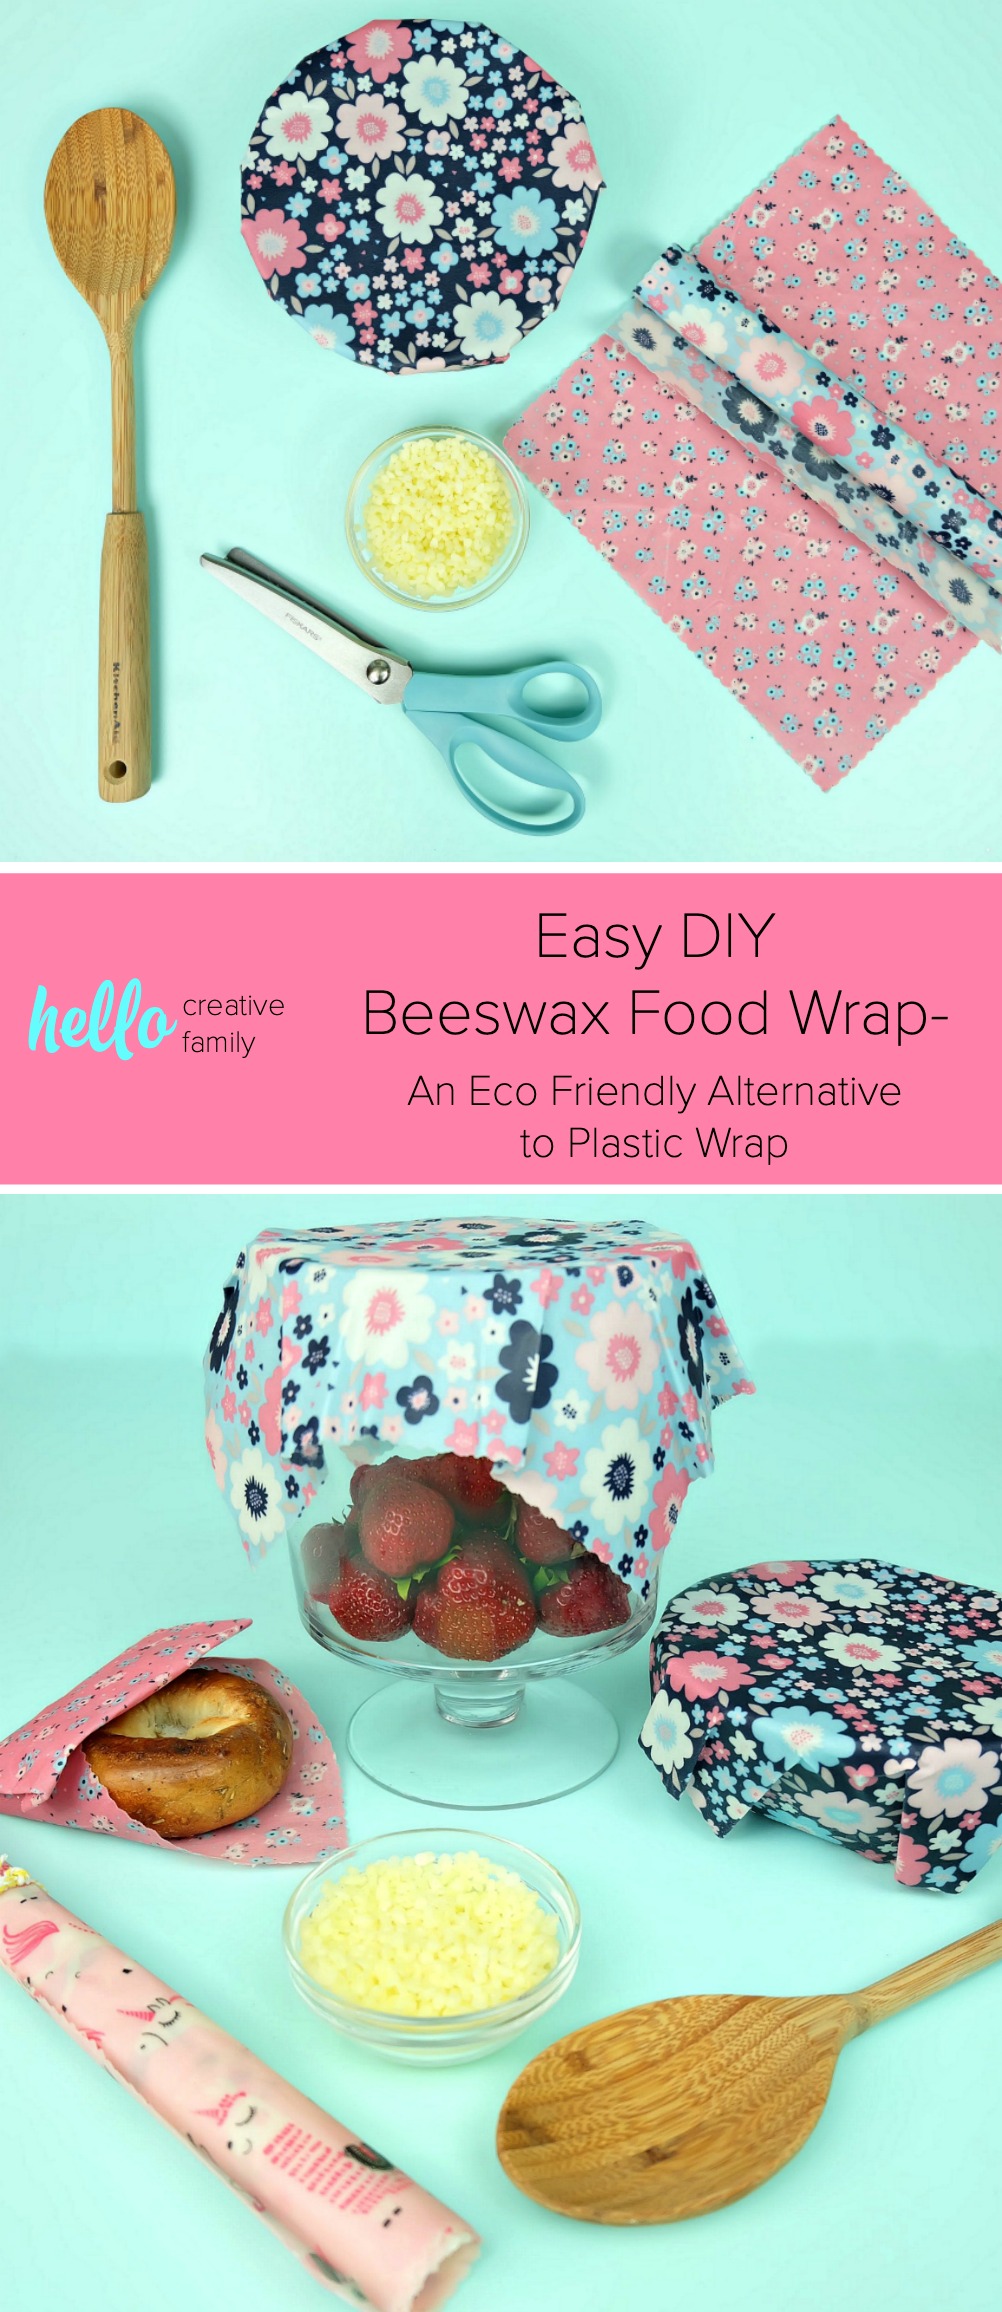 Easy Diy Beeswax Food Wrap An Eco Friendly Alternative To Plastic Wrap